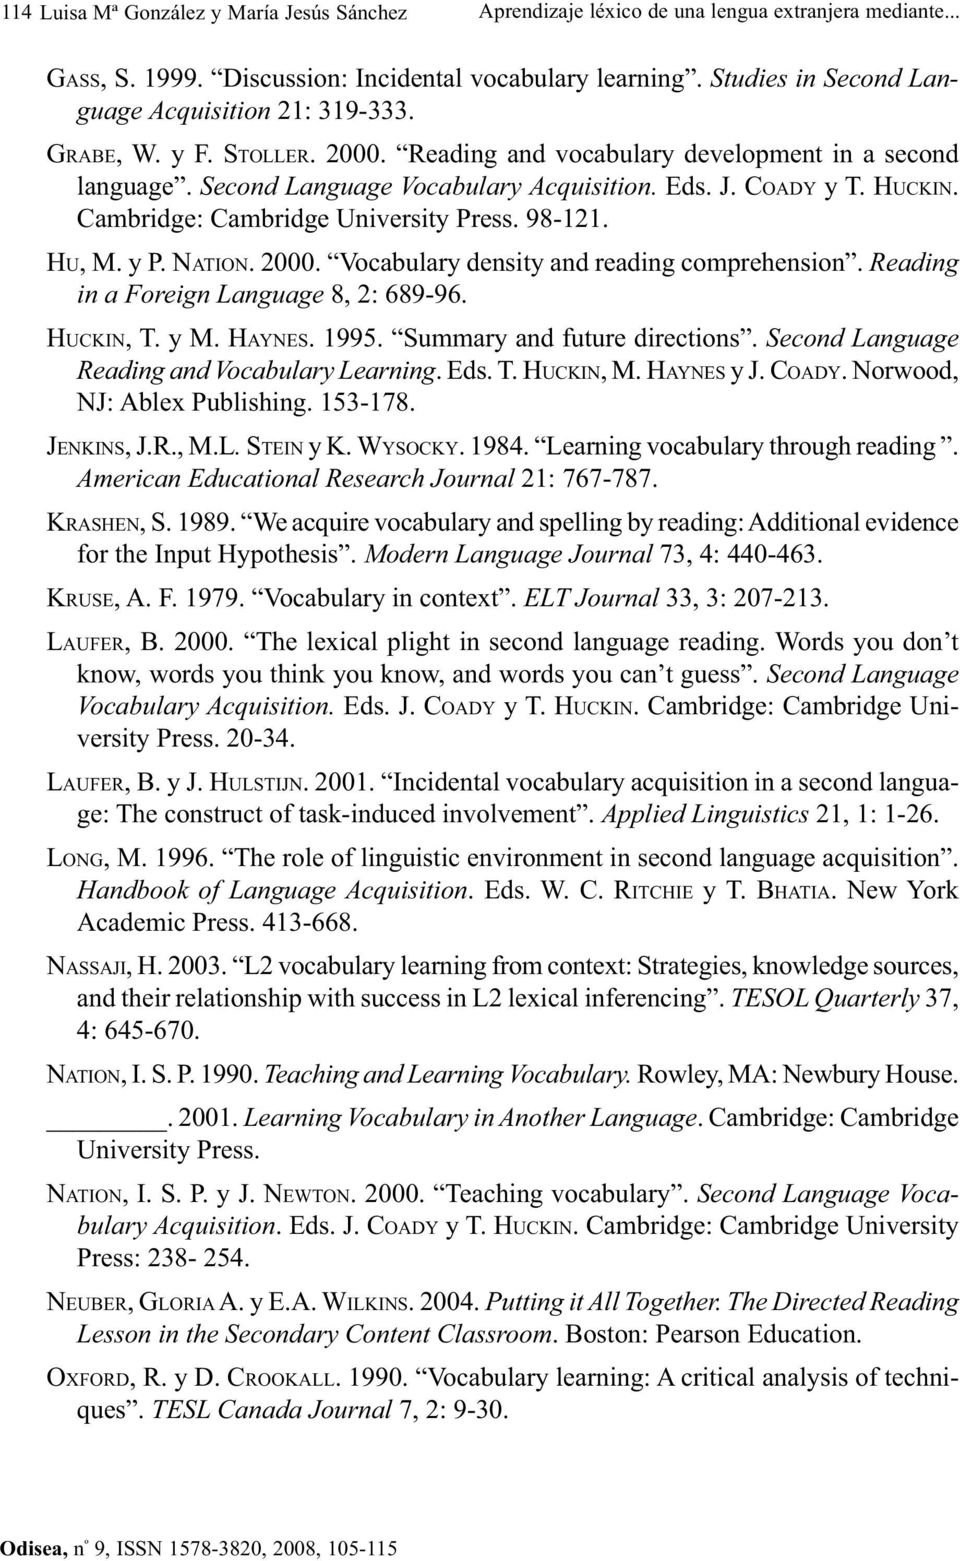 HUCKIN. Cambridge: Cambridge University Press. 98-121. HU, M. y P. NATION. 2000. Vocabulary density and reading comprehension. Reading in a Foreign Language 8, 2: 689-96. HUCKIN, T. y M. HAYNES. 1995.